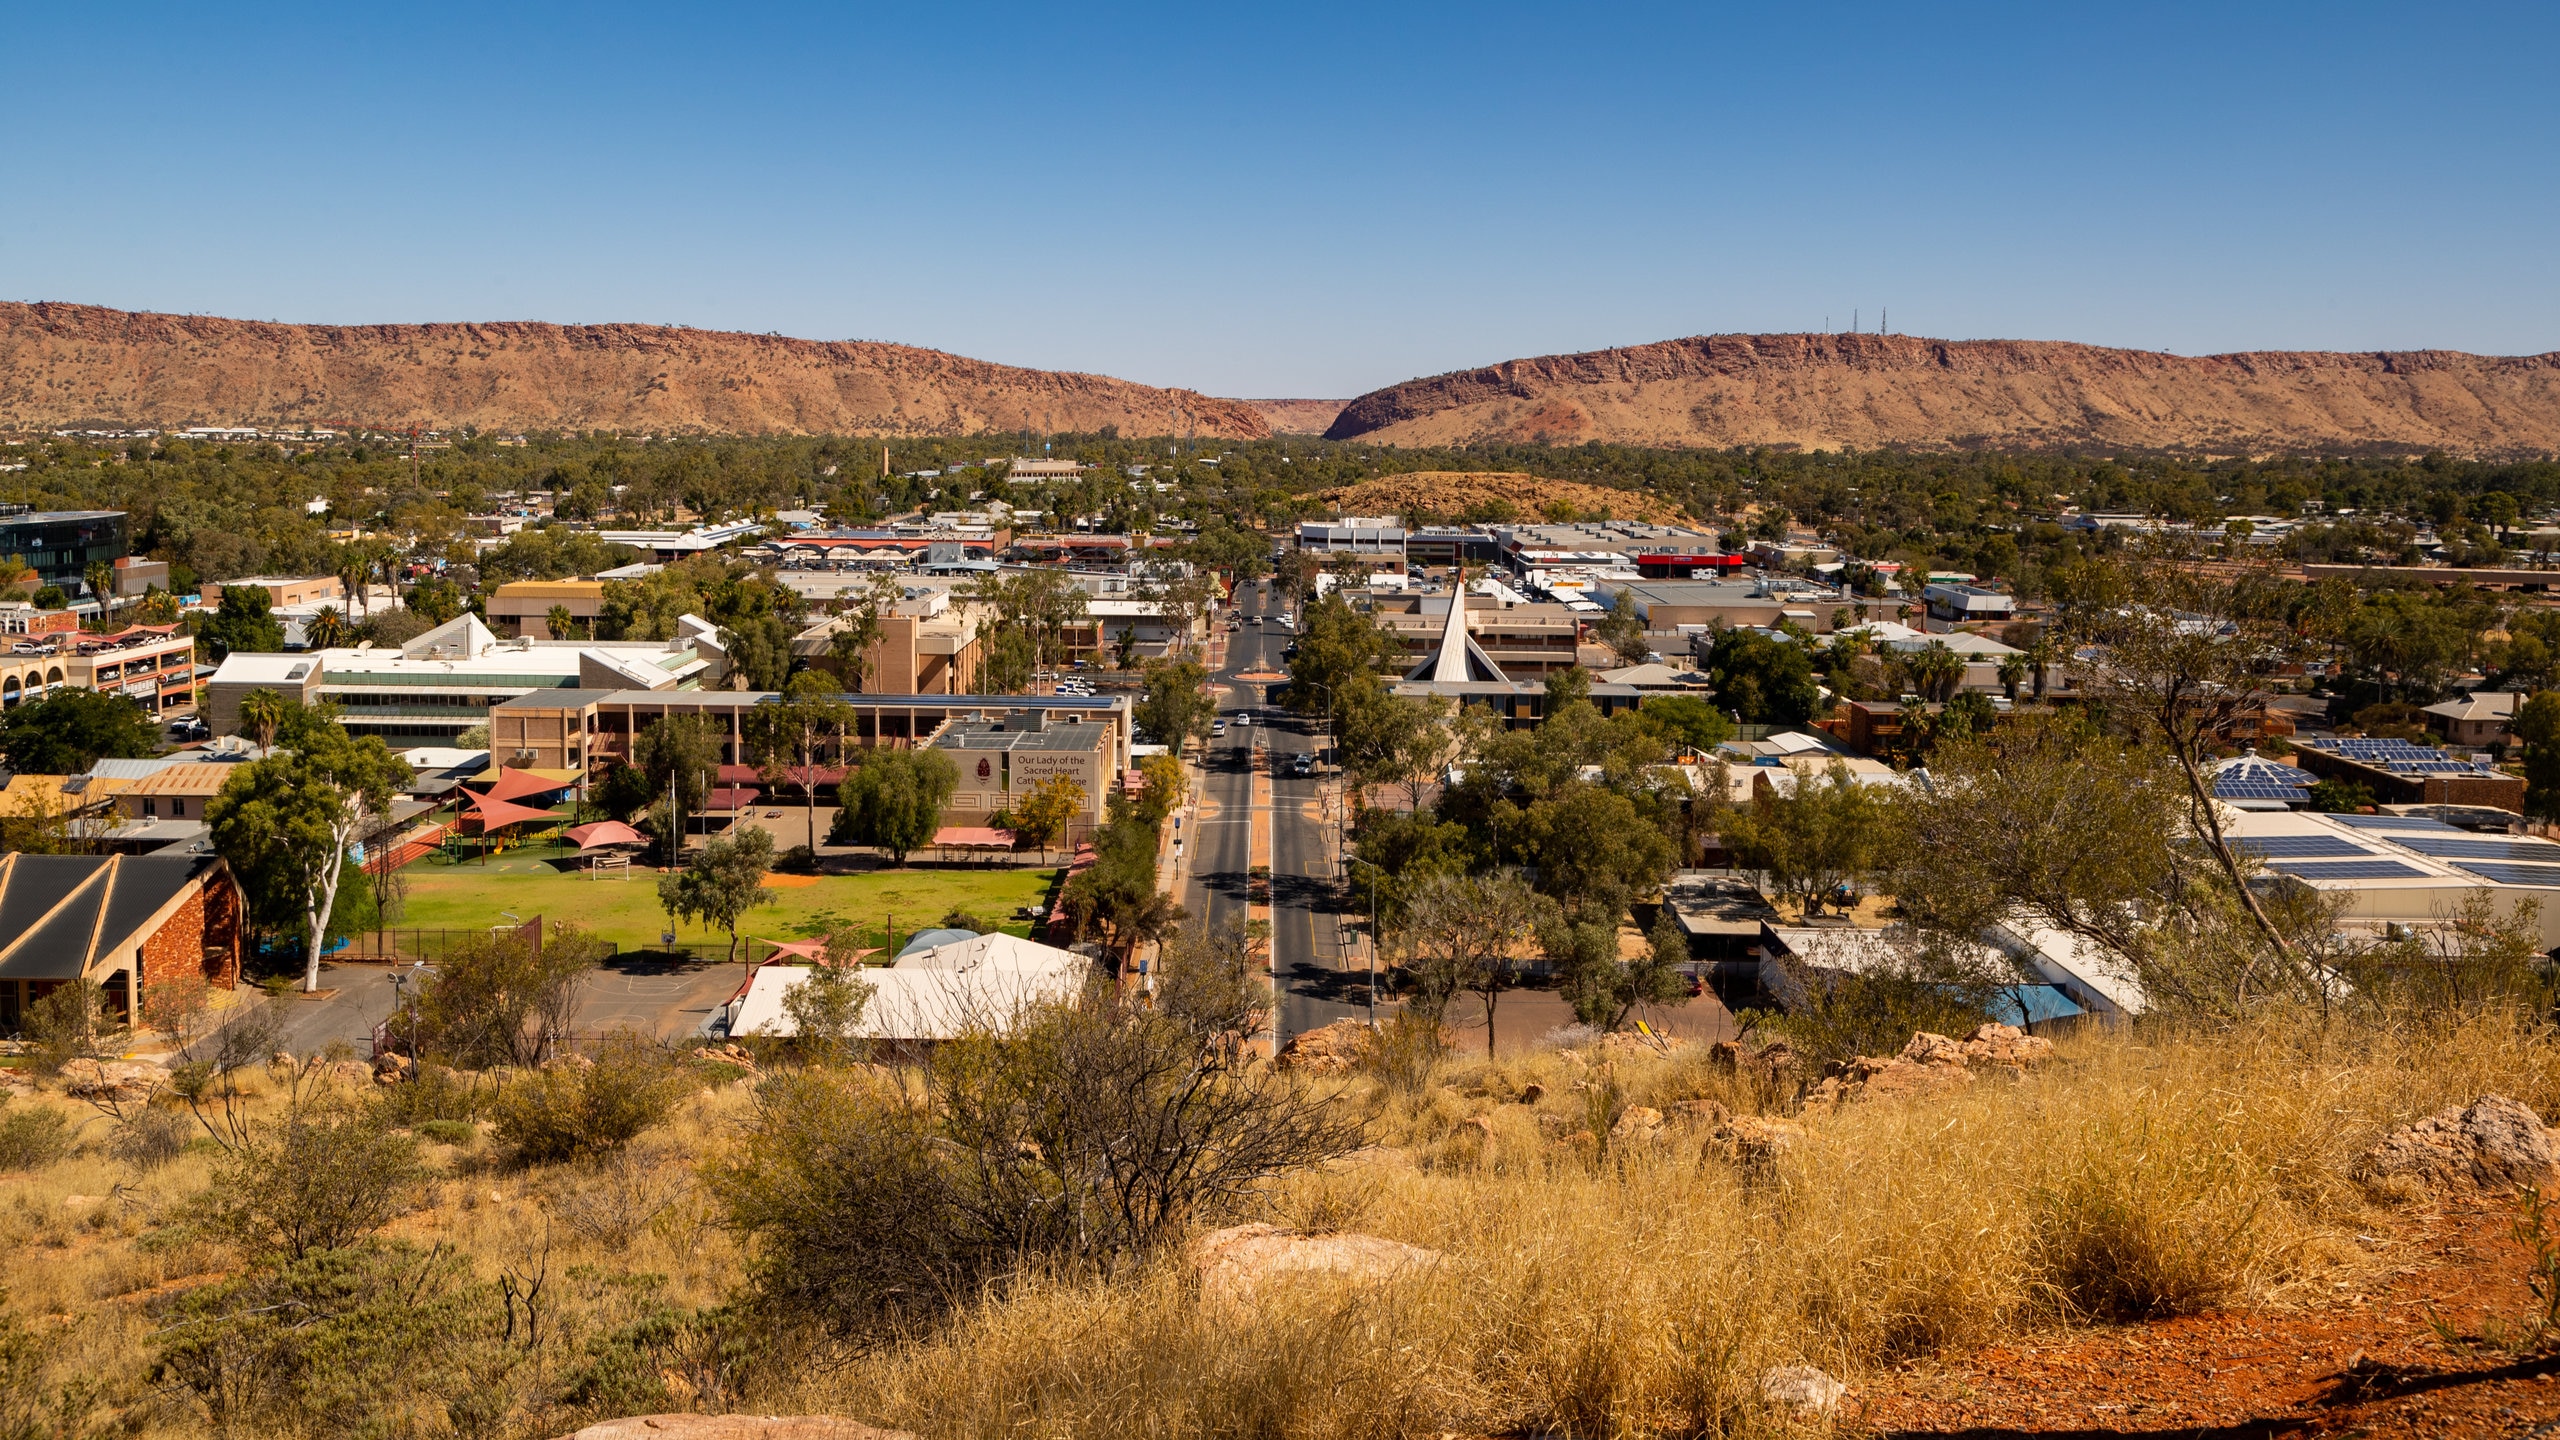 Aerial view of Alice Springs, Australia, showcasing the vibrant red desert landscape